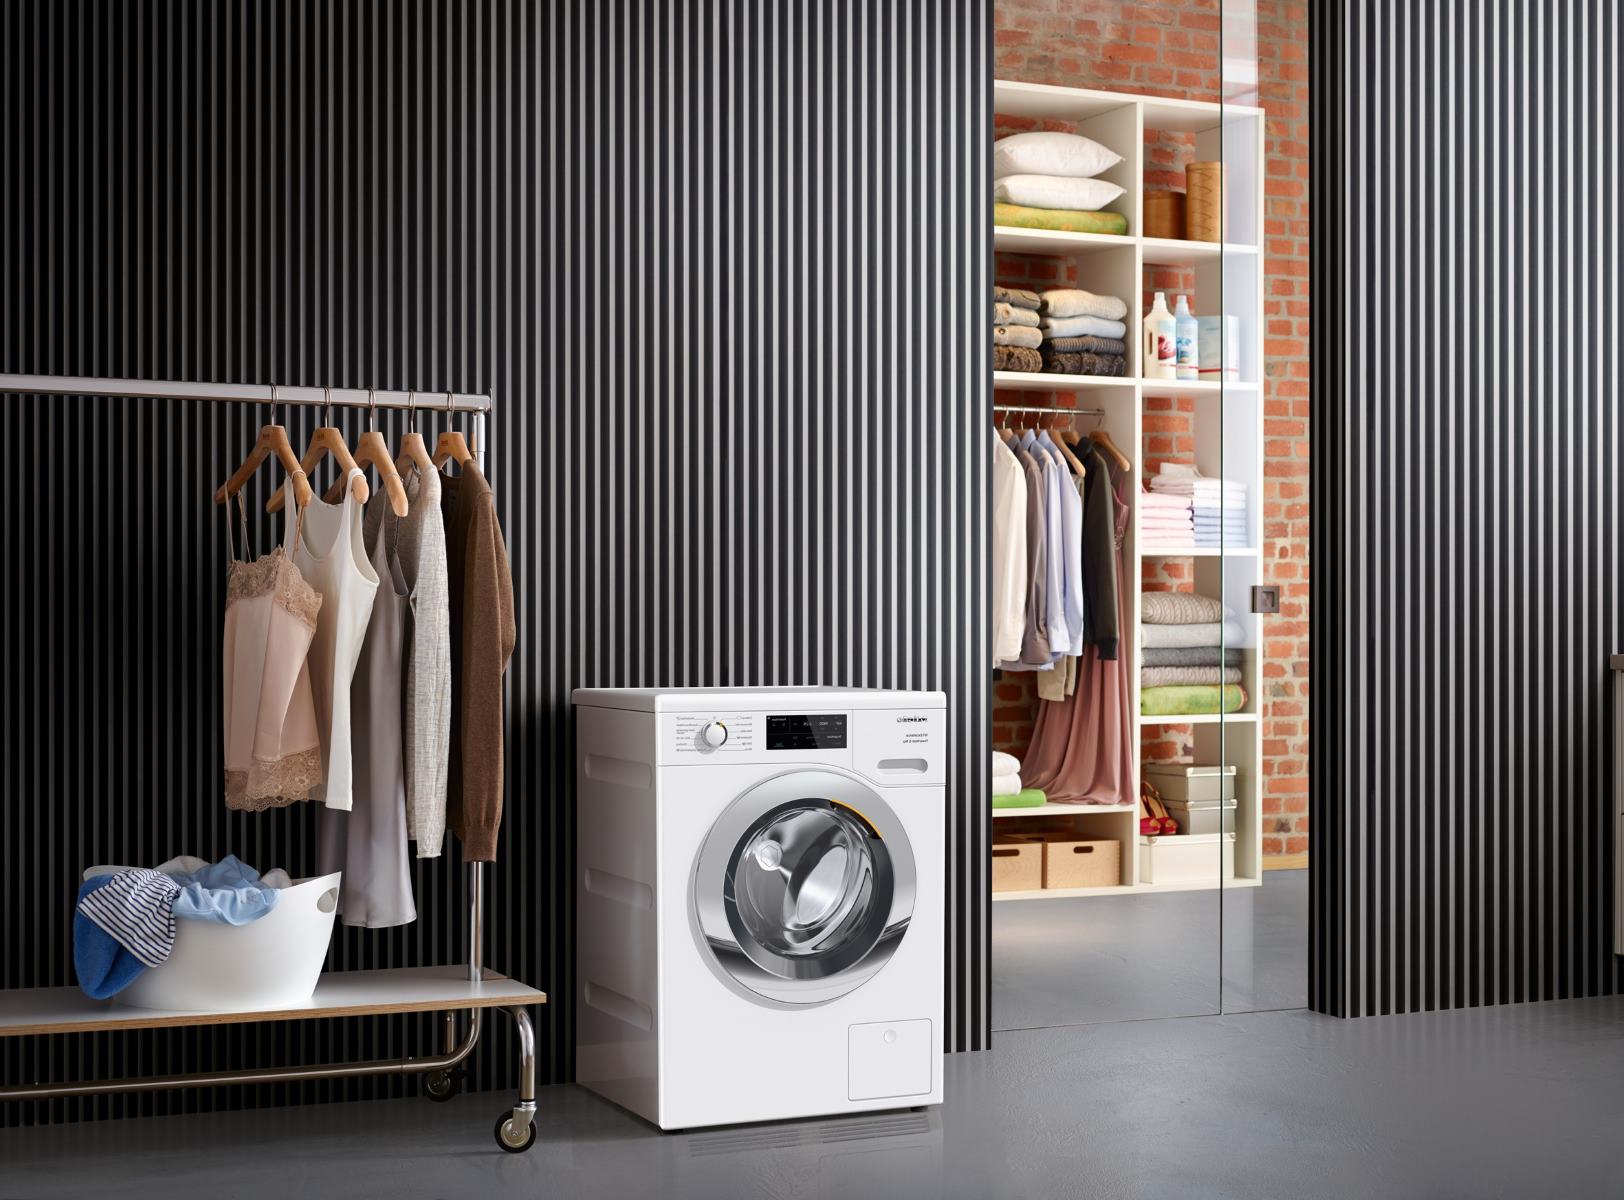 What Does Powerwash Mean On A Washing Machine